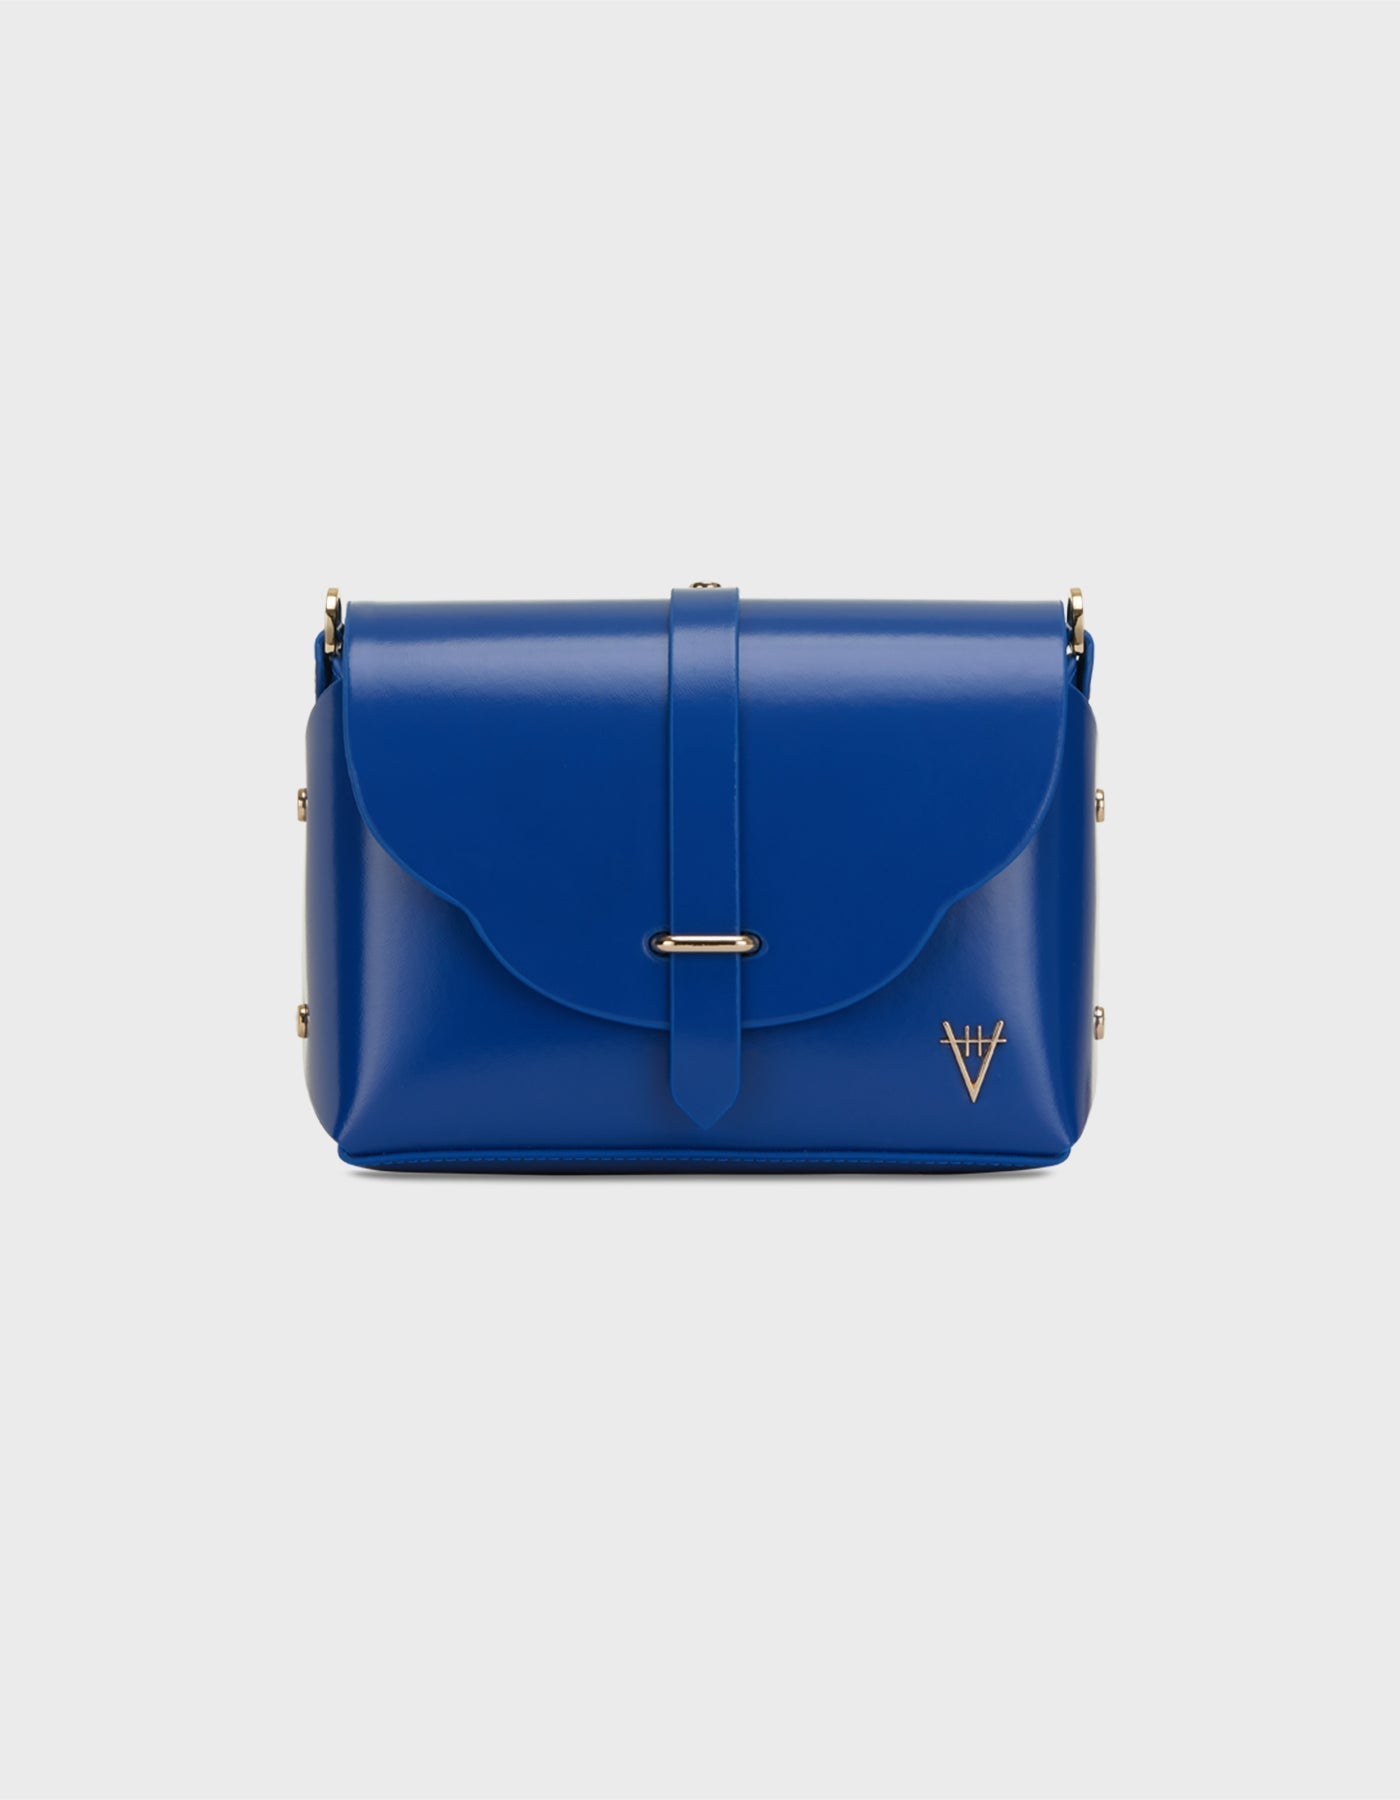 Hiva Atelier | Harmonia Shoulder Bag Sodalite Blue | Beautiful and Versatile Leather Accessories